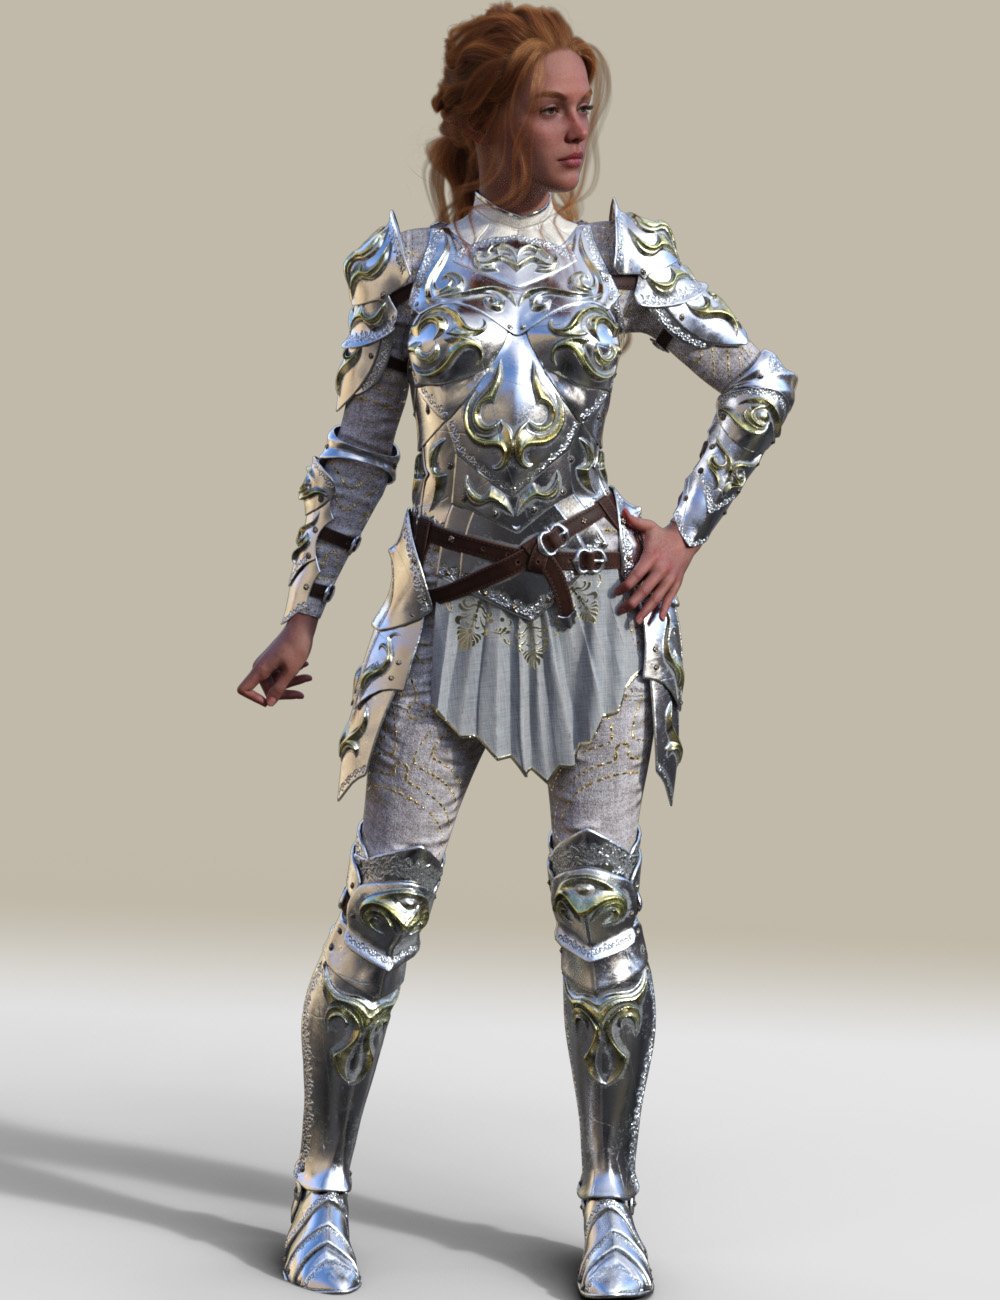 Aurora Guardian Armor for Geneis 9 by: Onnel, 3D Models by Daz 3D